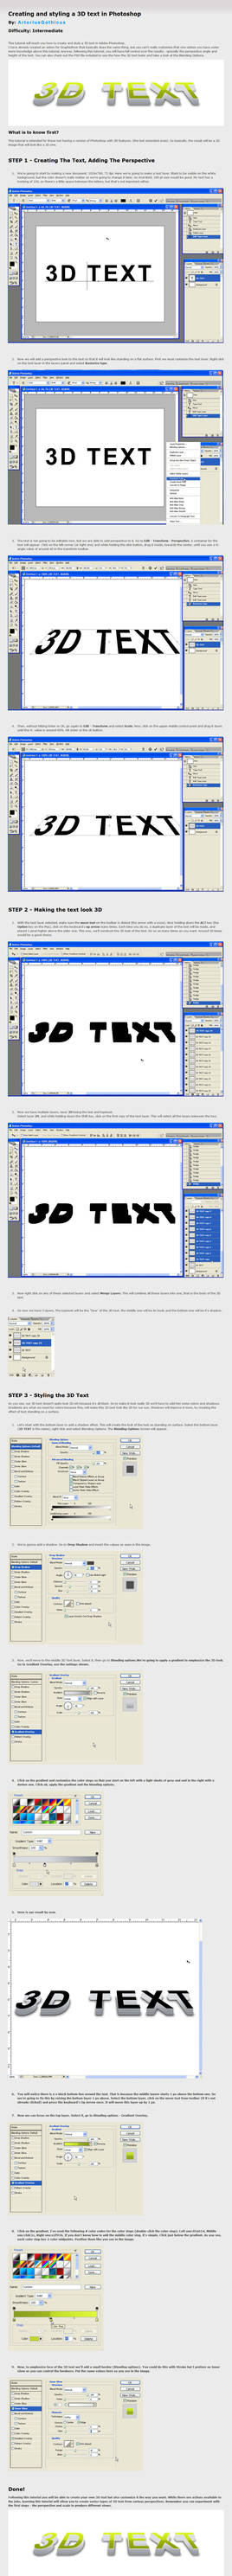 Photoshop 3D Text Tutorial